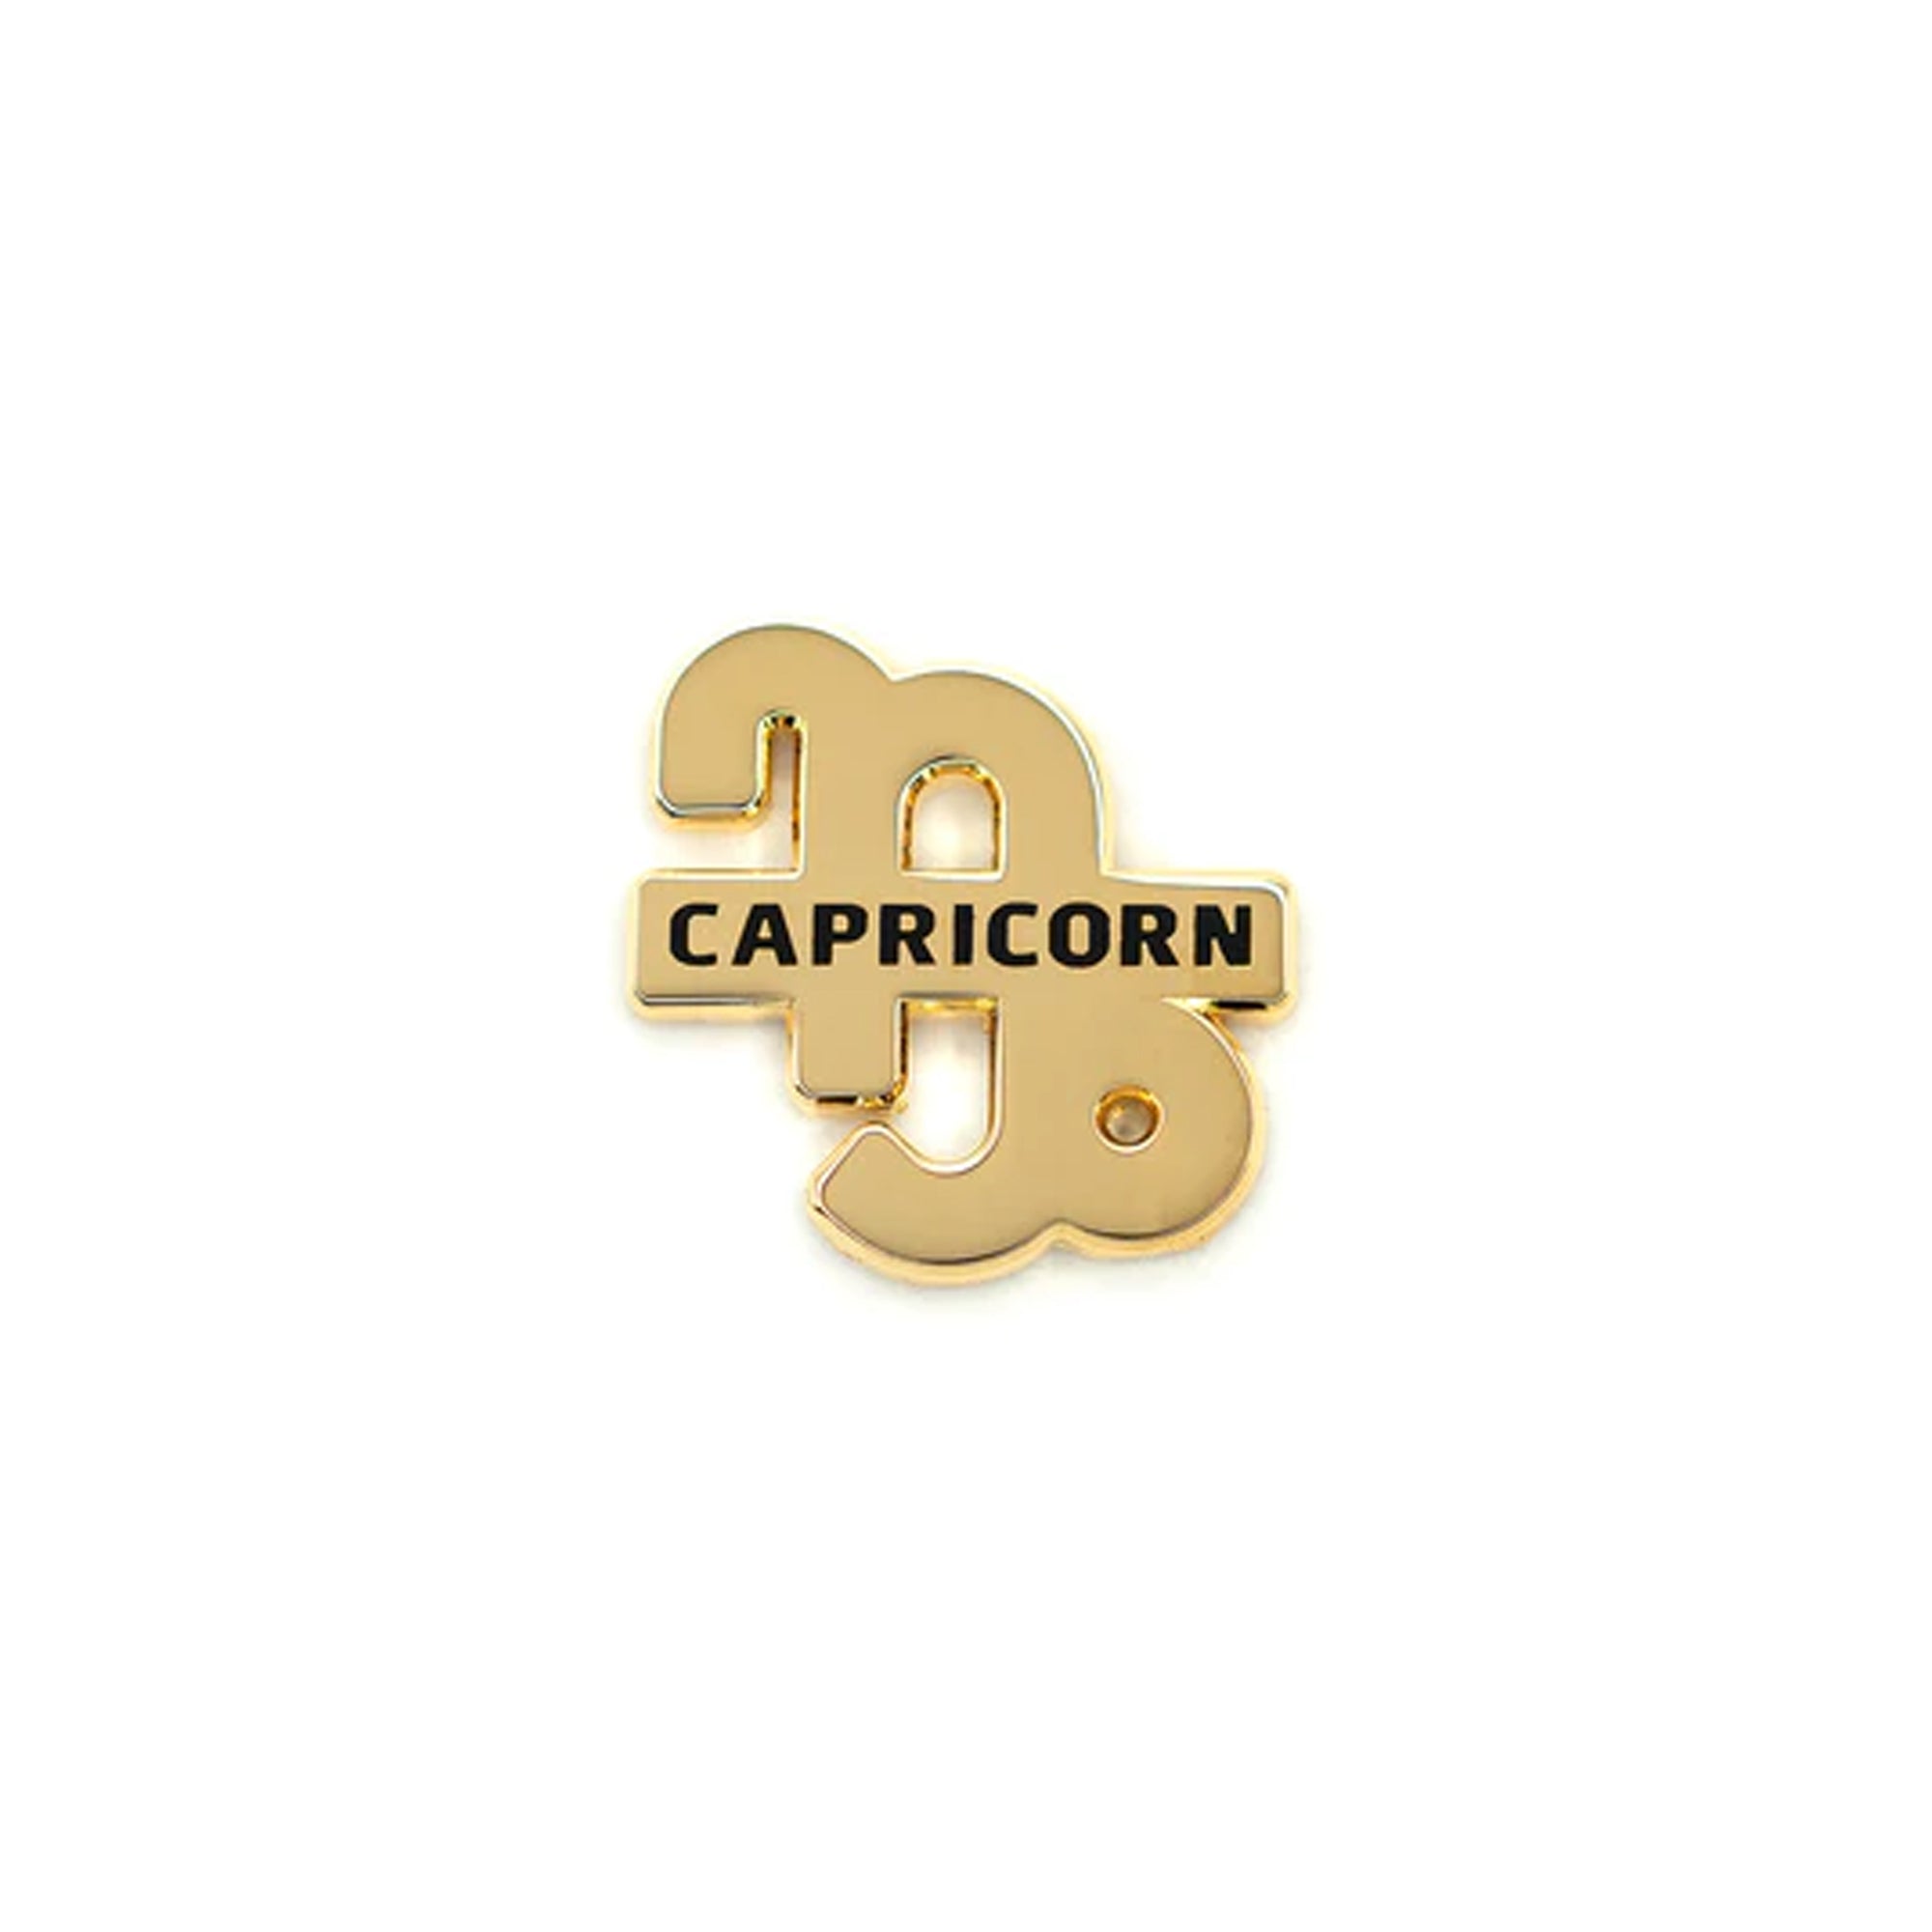 Hdqtrs Capricorn Pin